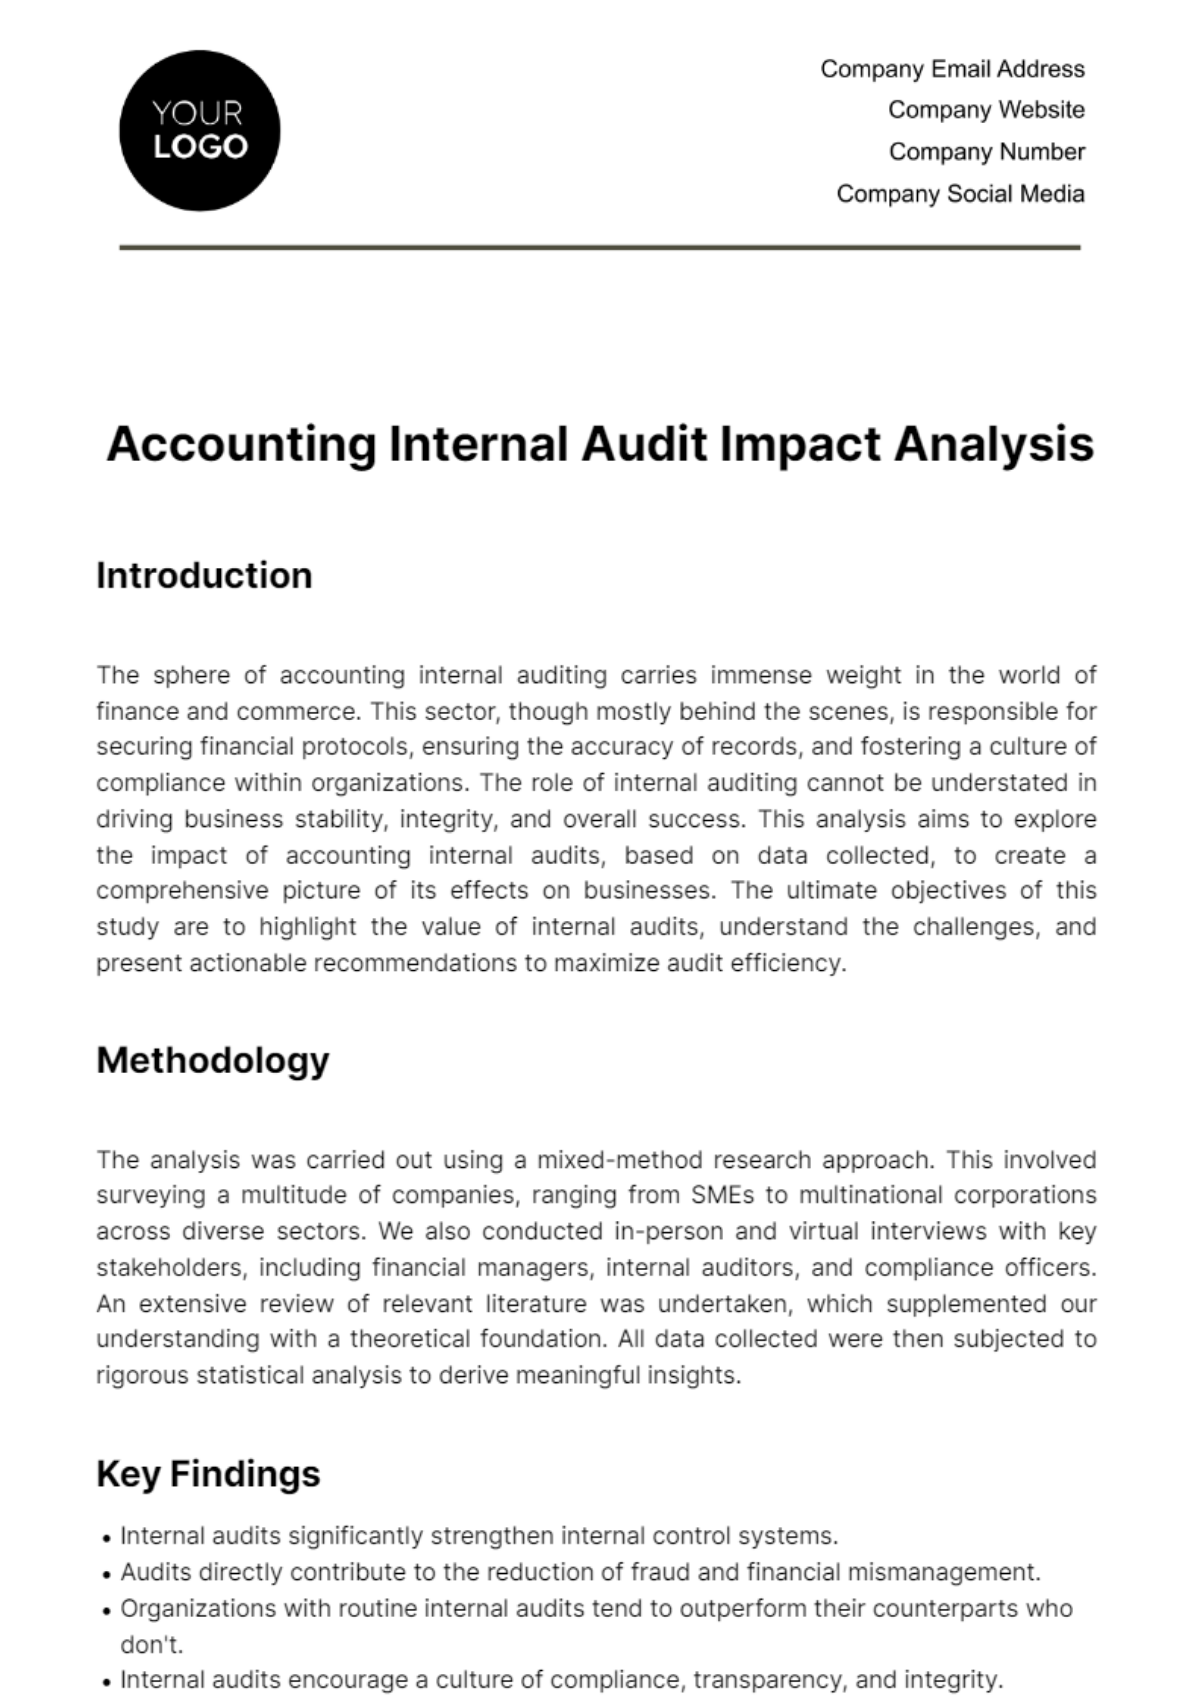 Accounting Internal Audit Impact Analysis Template